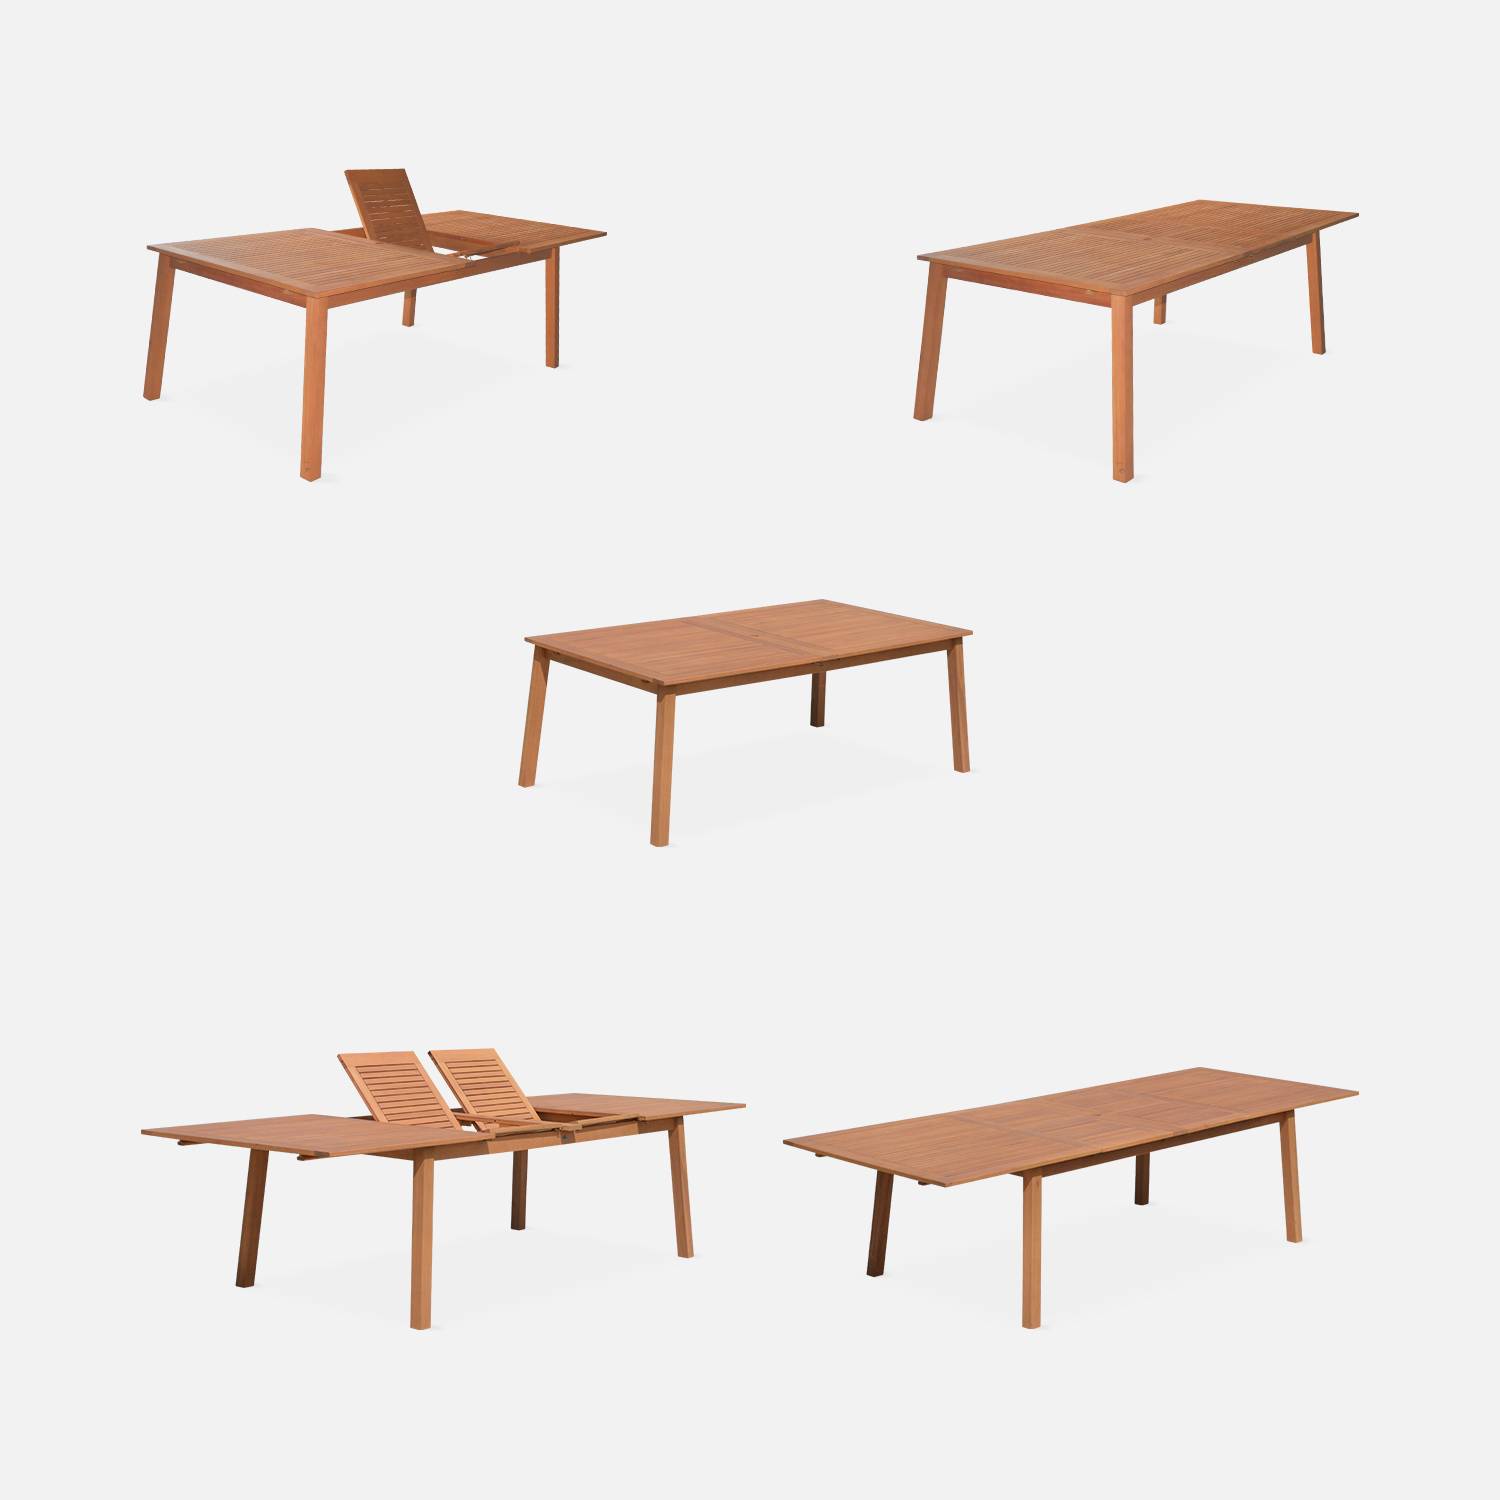 10-seater garden dining set, extendable 200-300cm FSC-eucalyptus wooden table, 8 chairs and 2 armchairs - Almeria 10 - Grey textilene seats Photo5